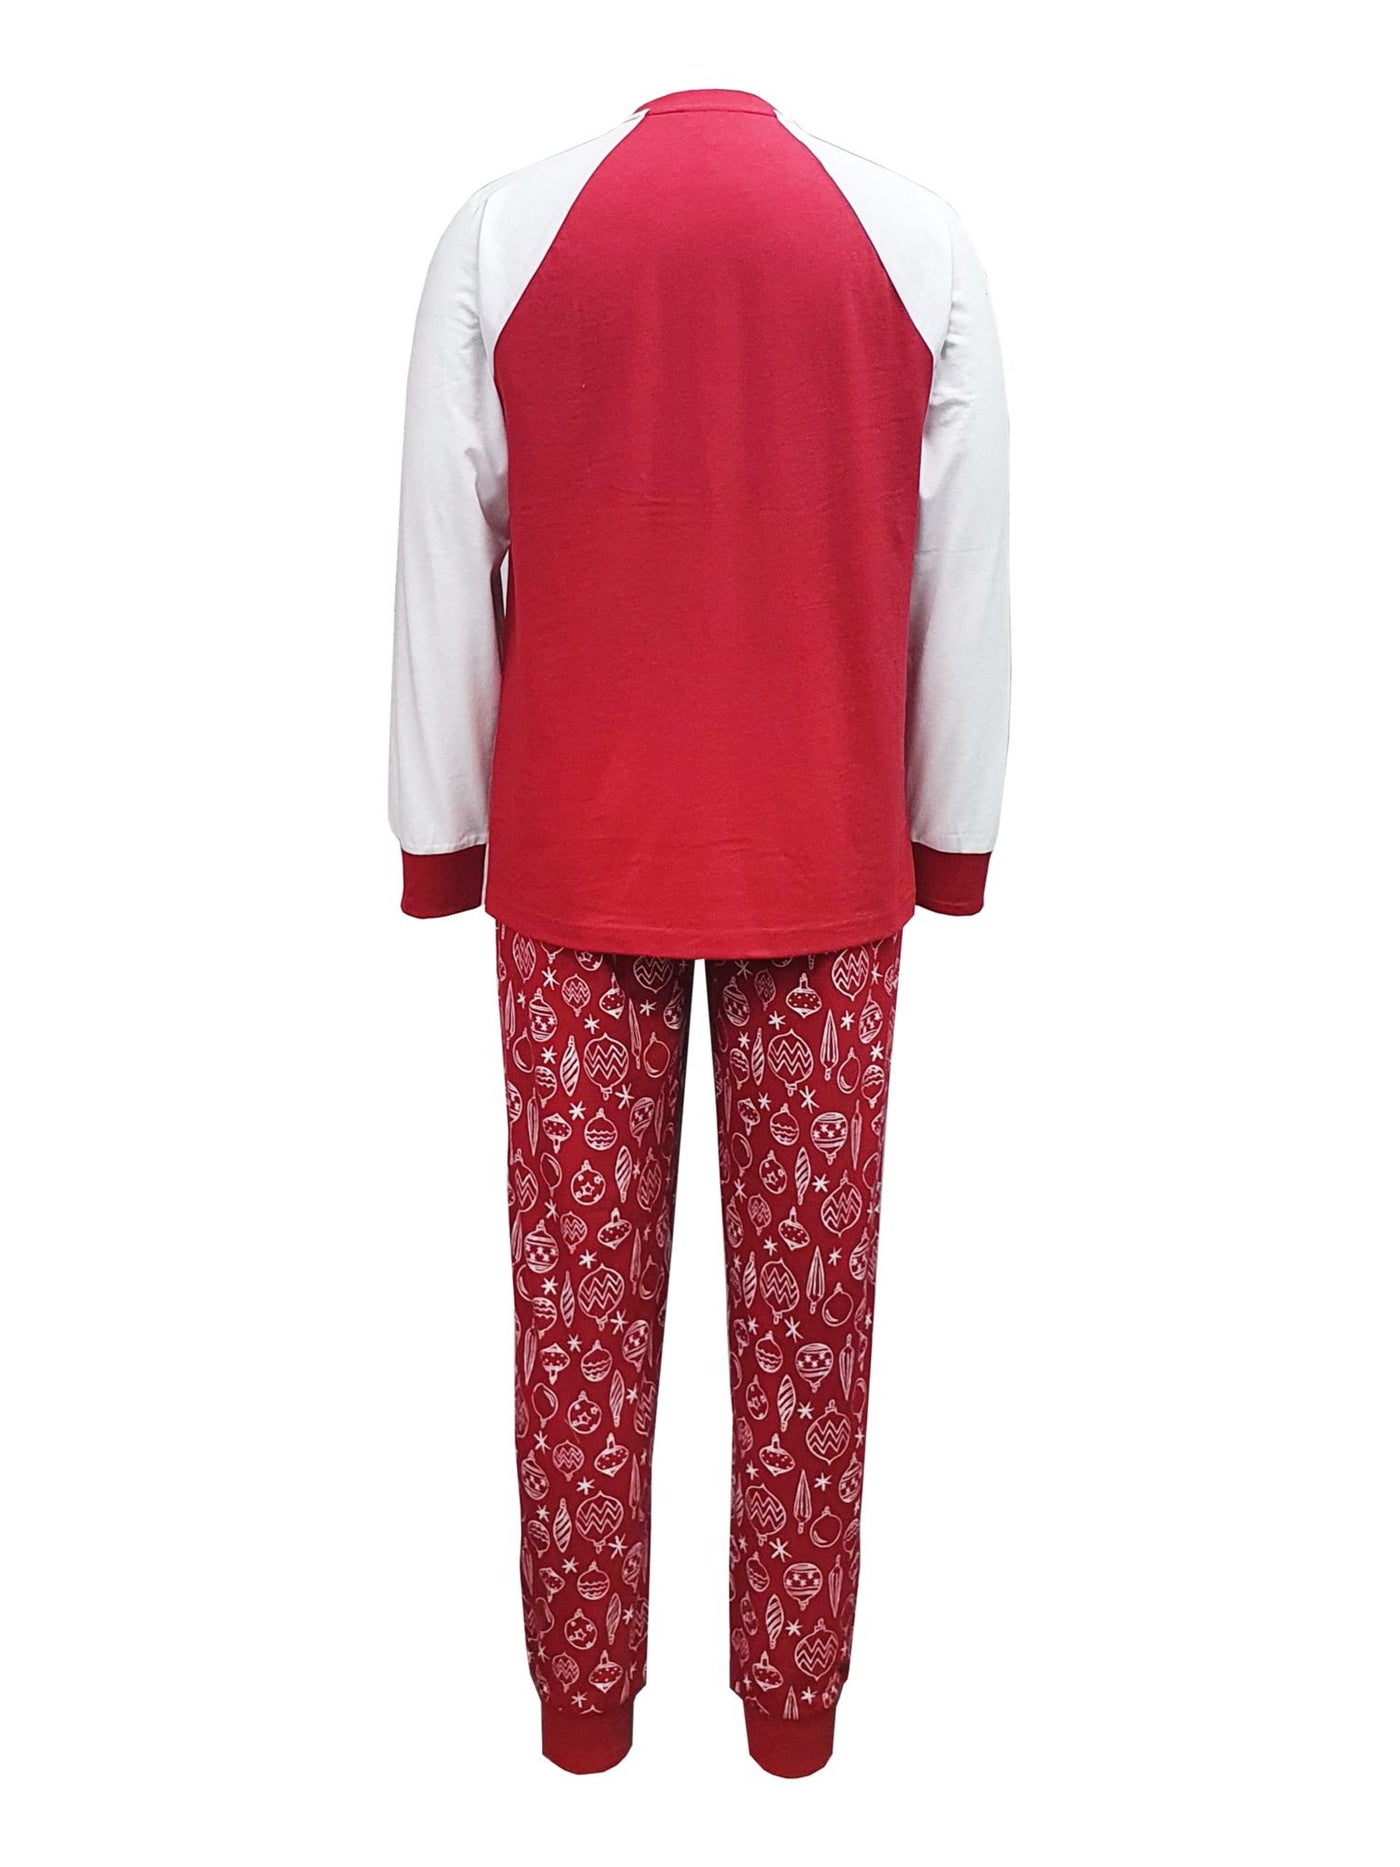 FAMILY PJs Mens Red Graphic Top Long Sleeve Cuffed Pants Pajamas Big & Tall 1XB